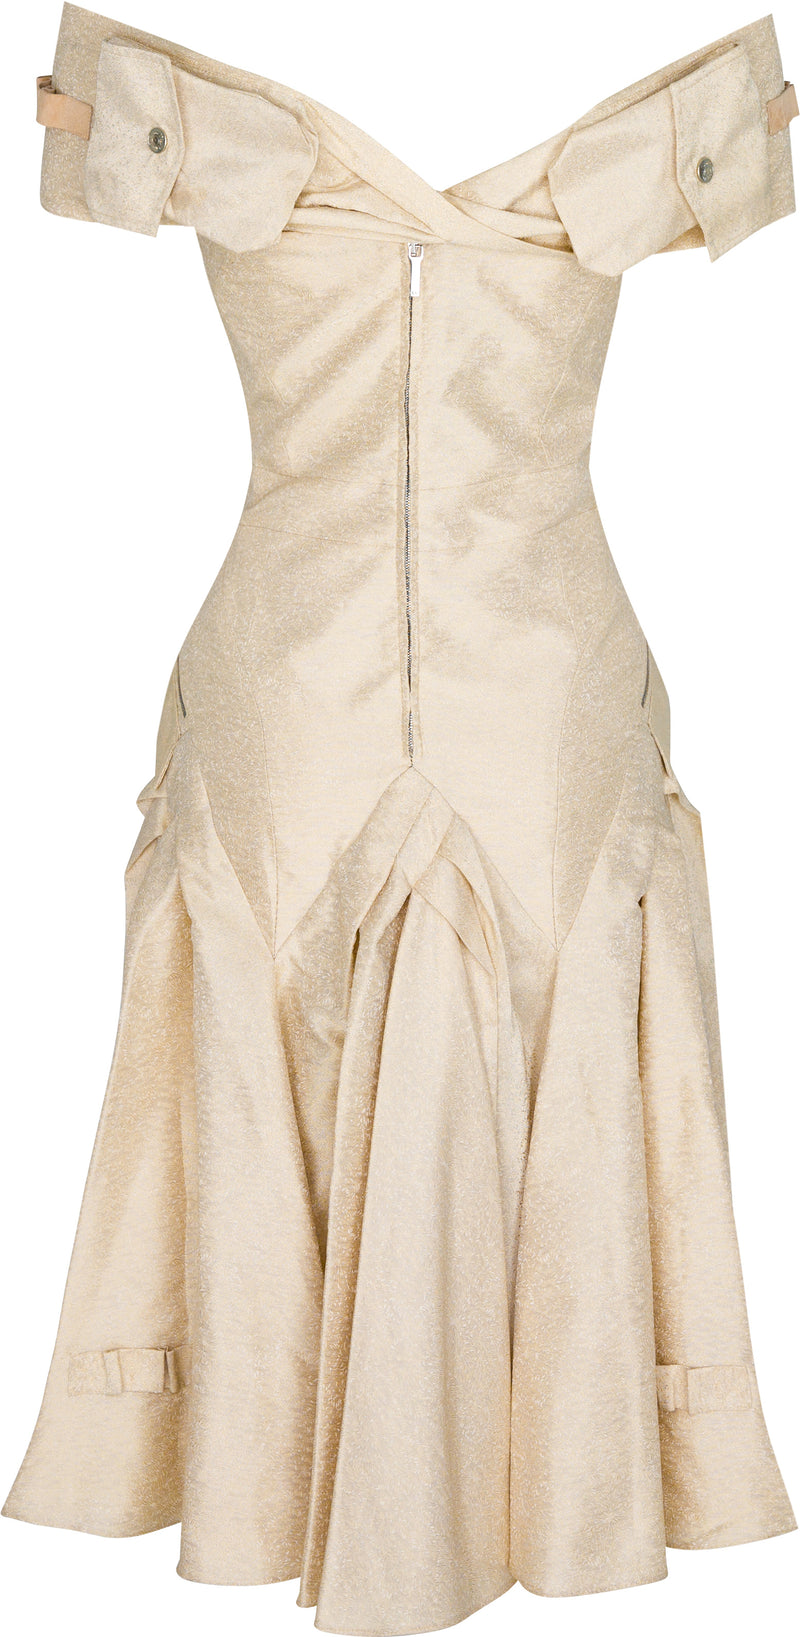 Christian Dior Spring 2003 Silk Jacquard Corset Dress